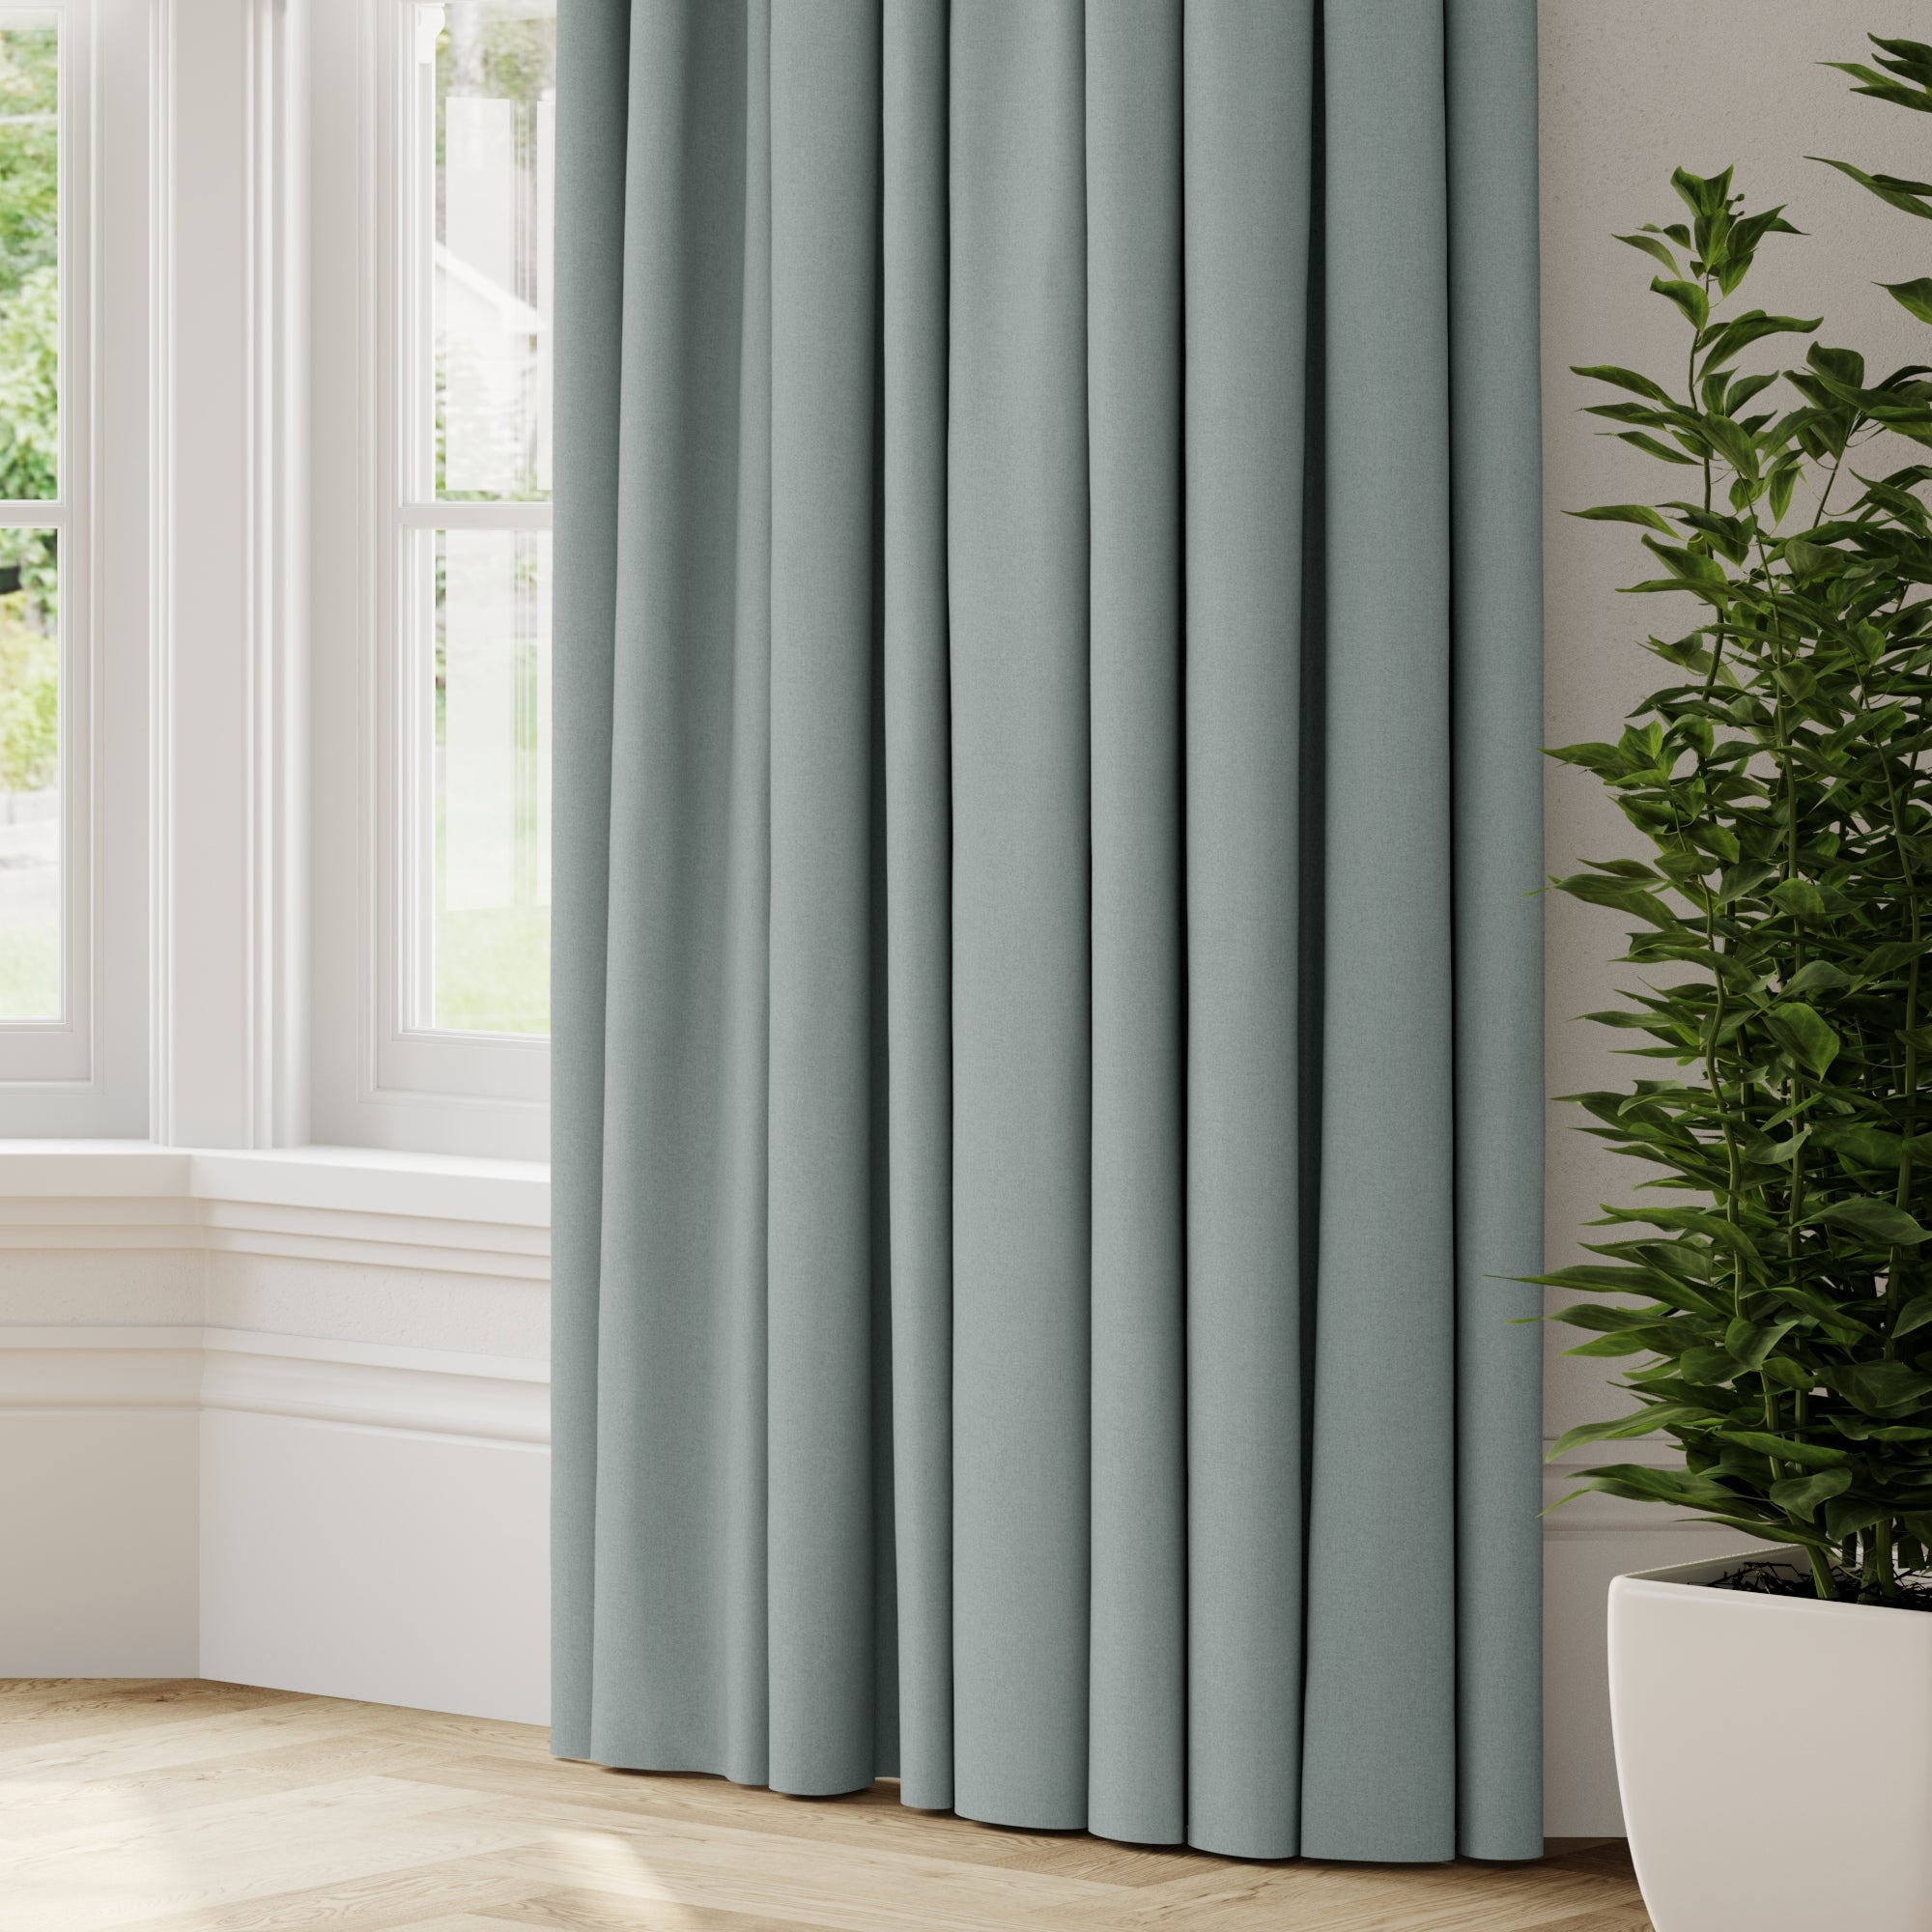 Savanna Made to Measure Fire Retardant Curtains blue